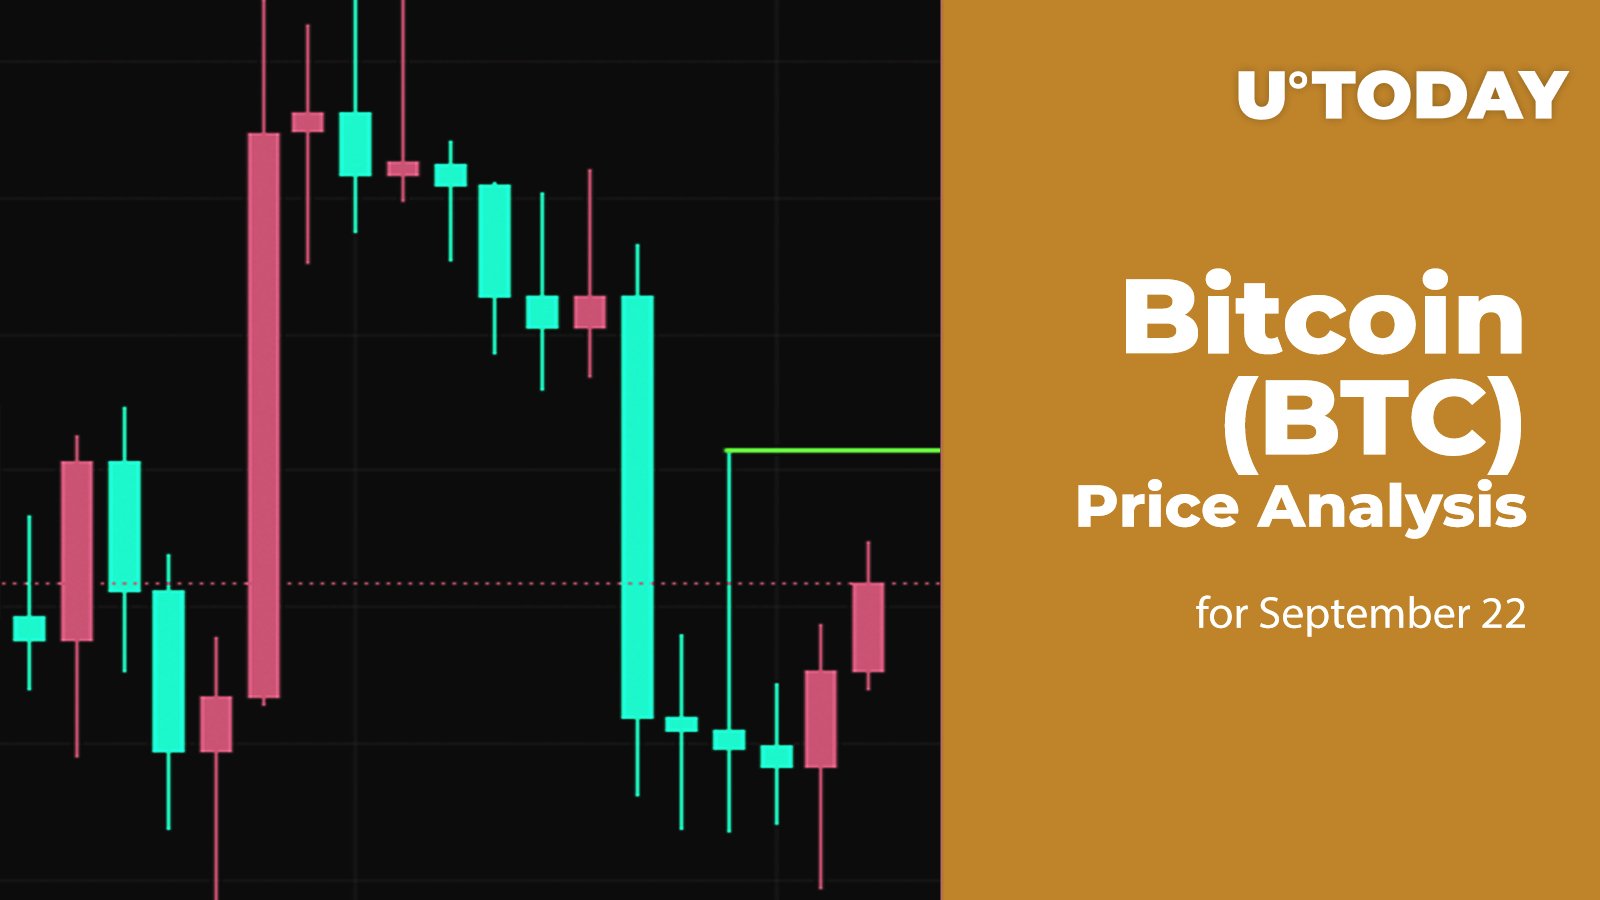 Bitcoin (BTC) Price Analysis for September 22